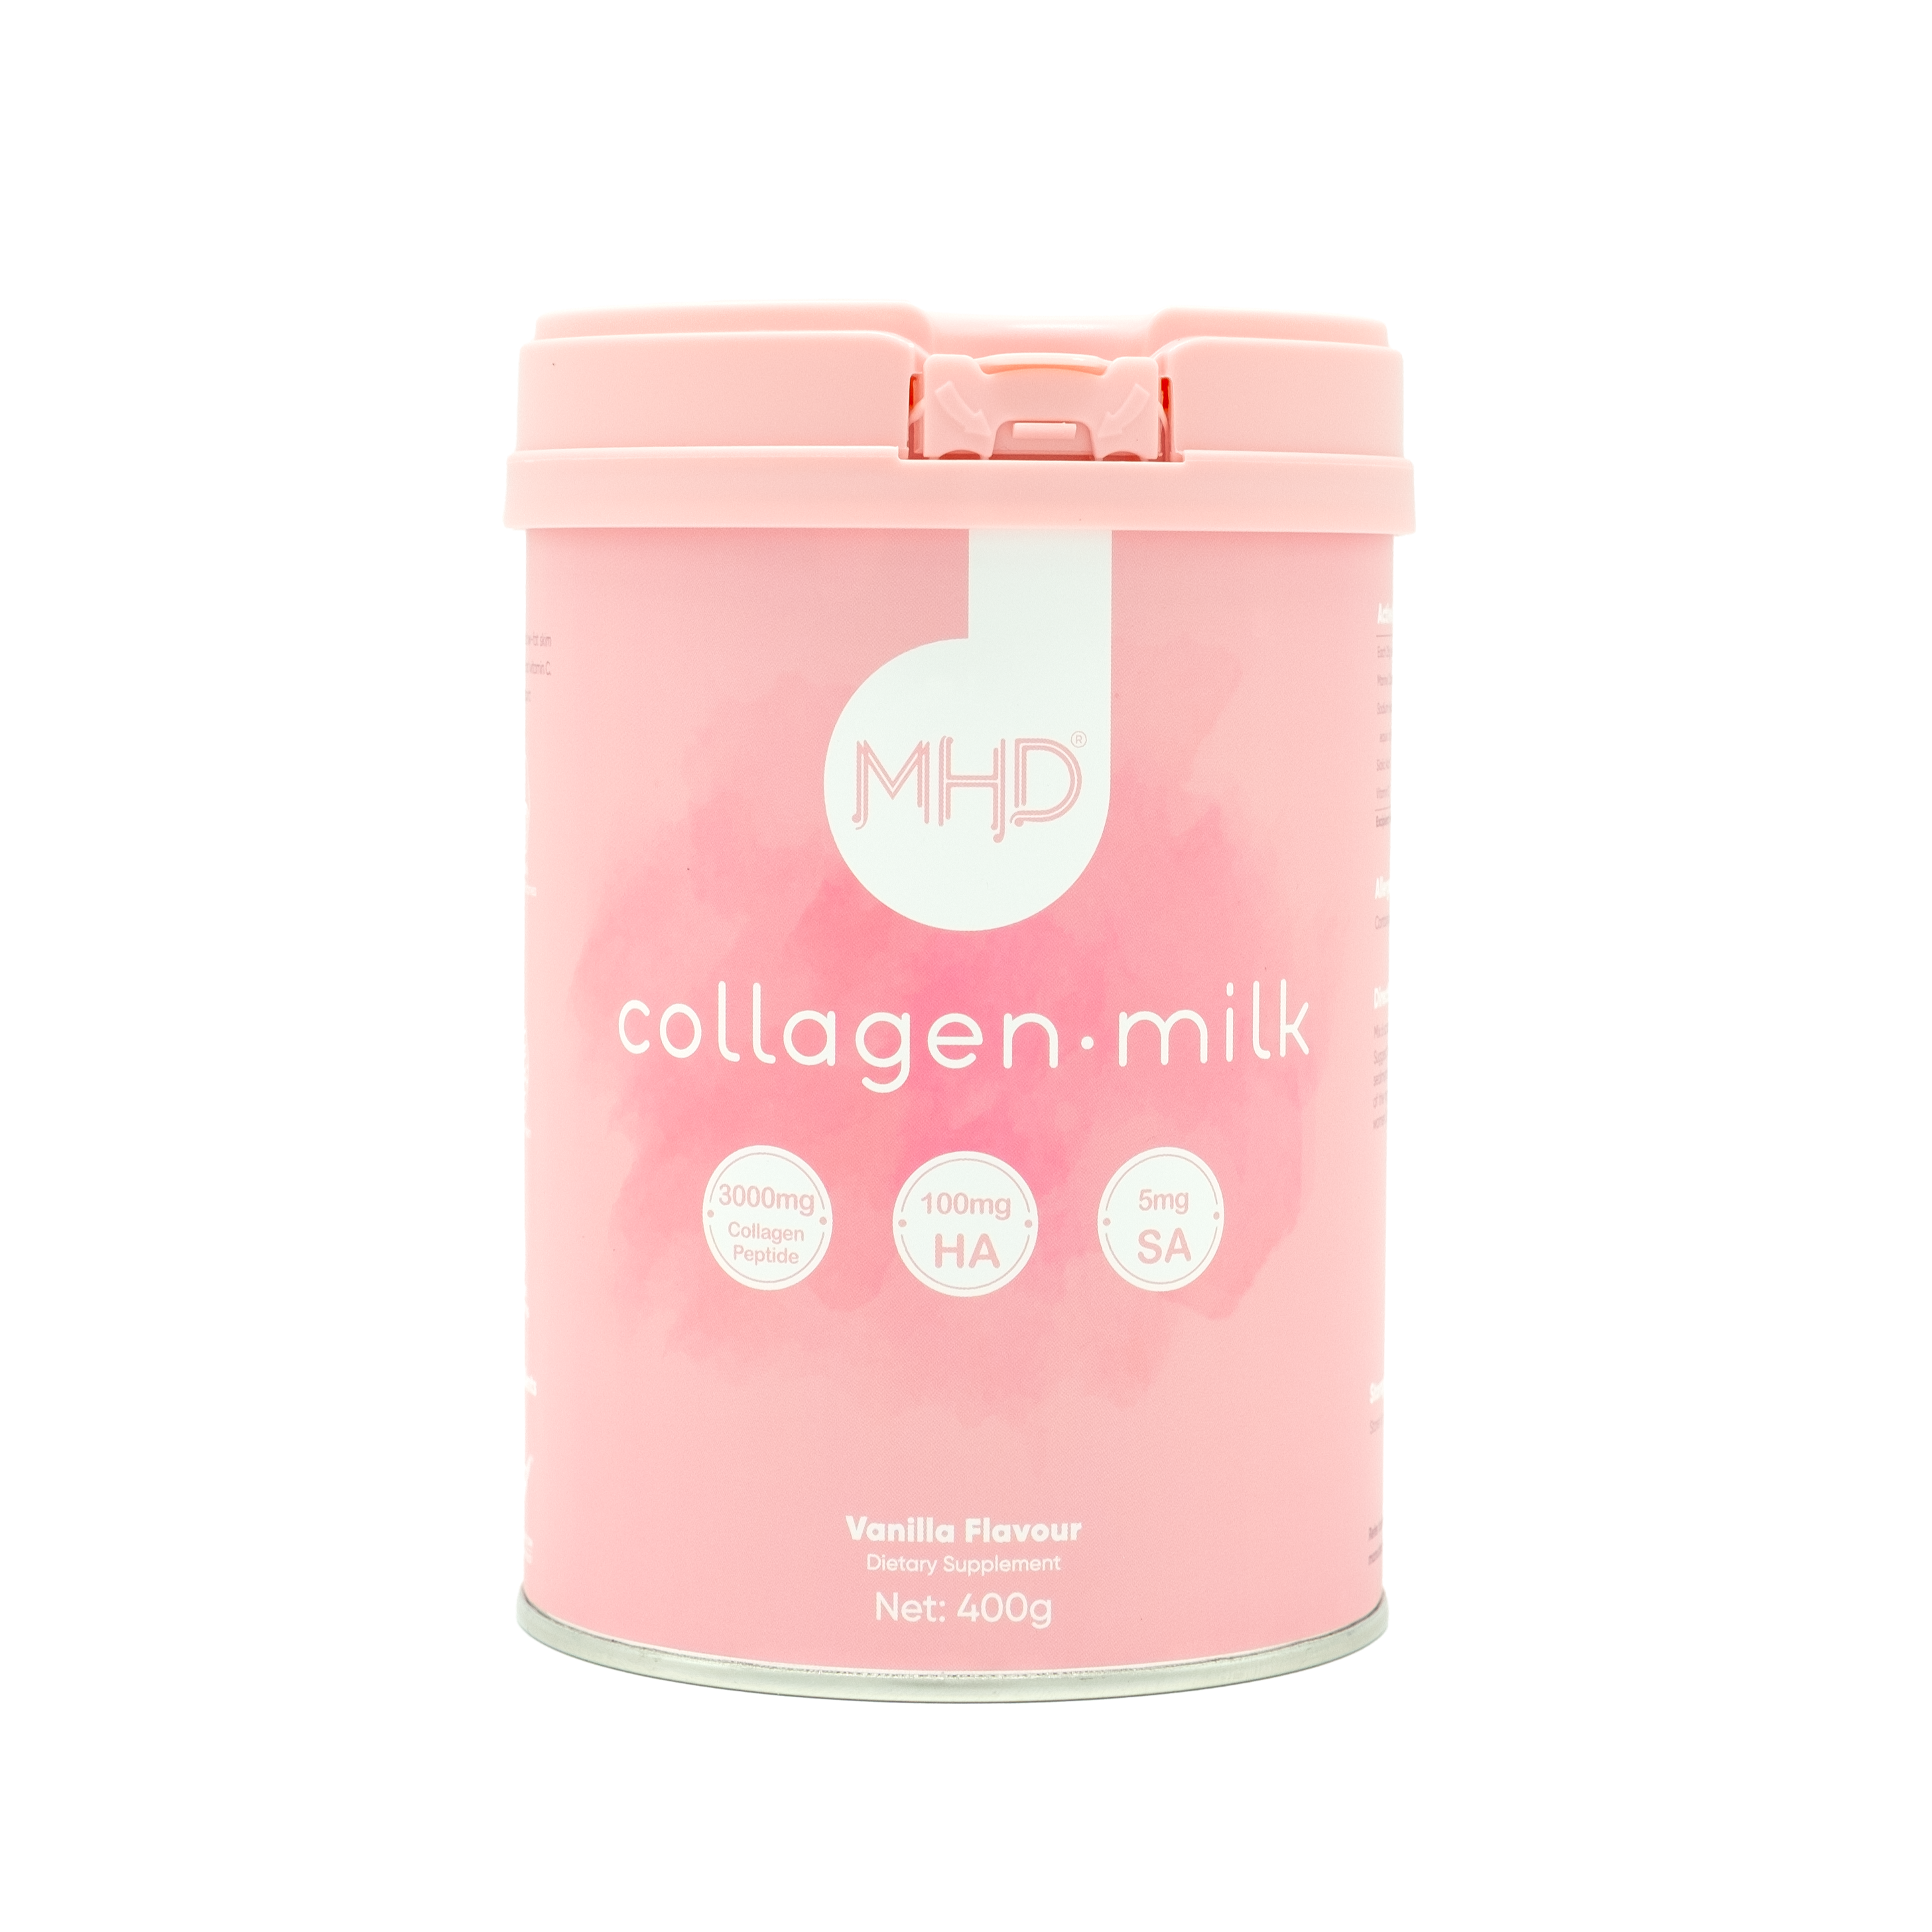 MHD® Collagen. HA. SA Milk Drink Powder